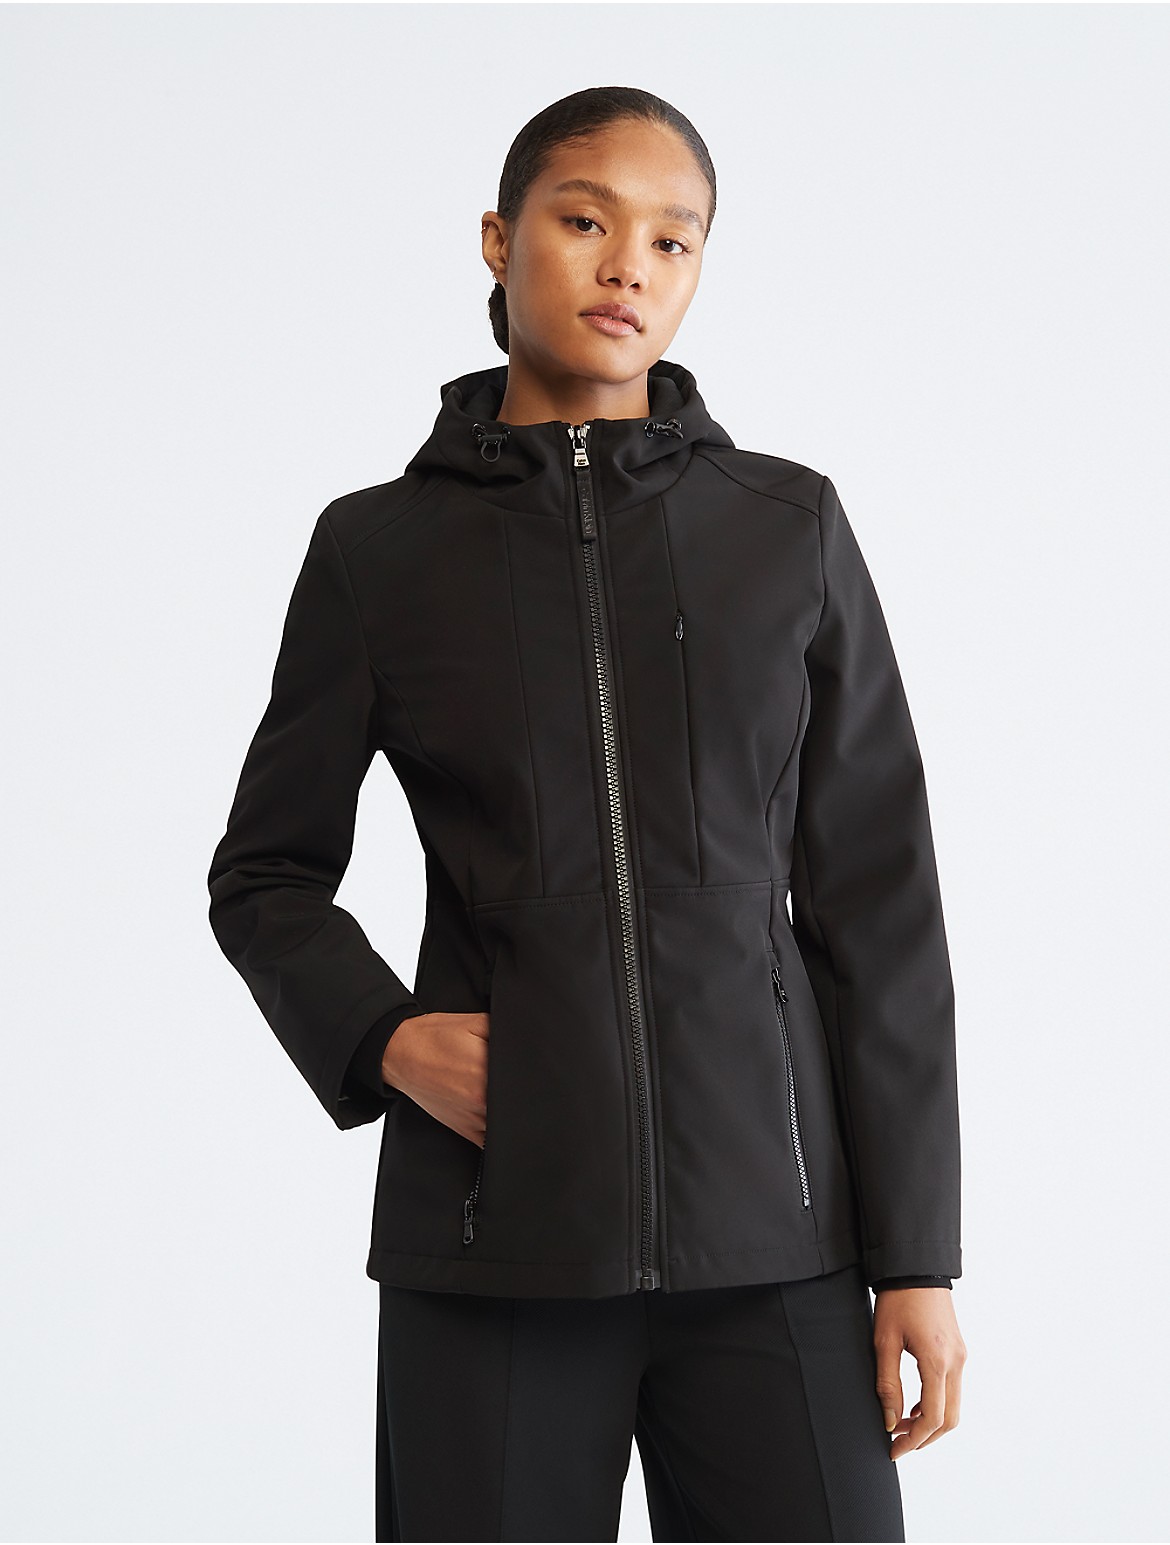 Calvin Klein Women's Hooded Soft Shell Jacket - Black - L